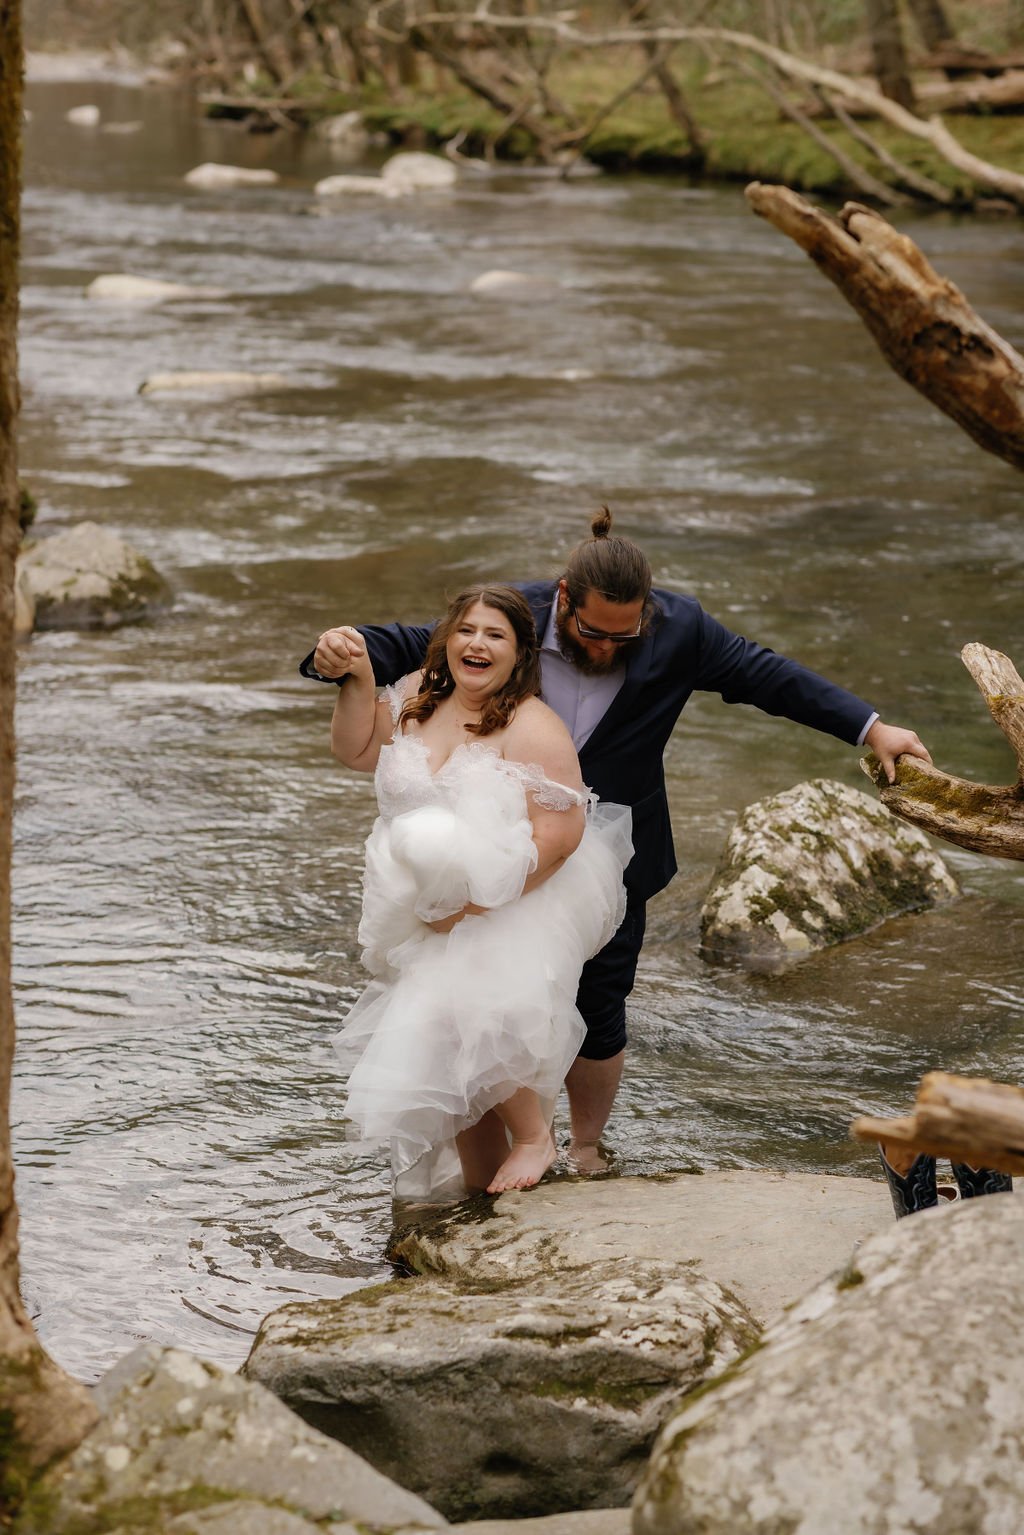 gatlinburg-photographer-5-signs-you-may-want-to-elope-to-gatlinburg-couple-walking-through-water